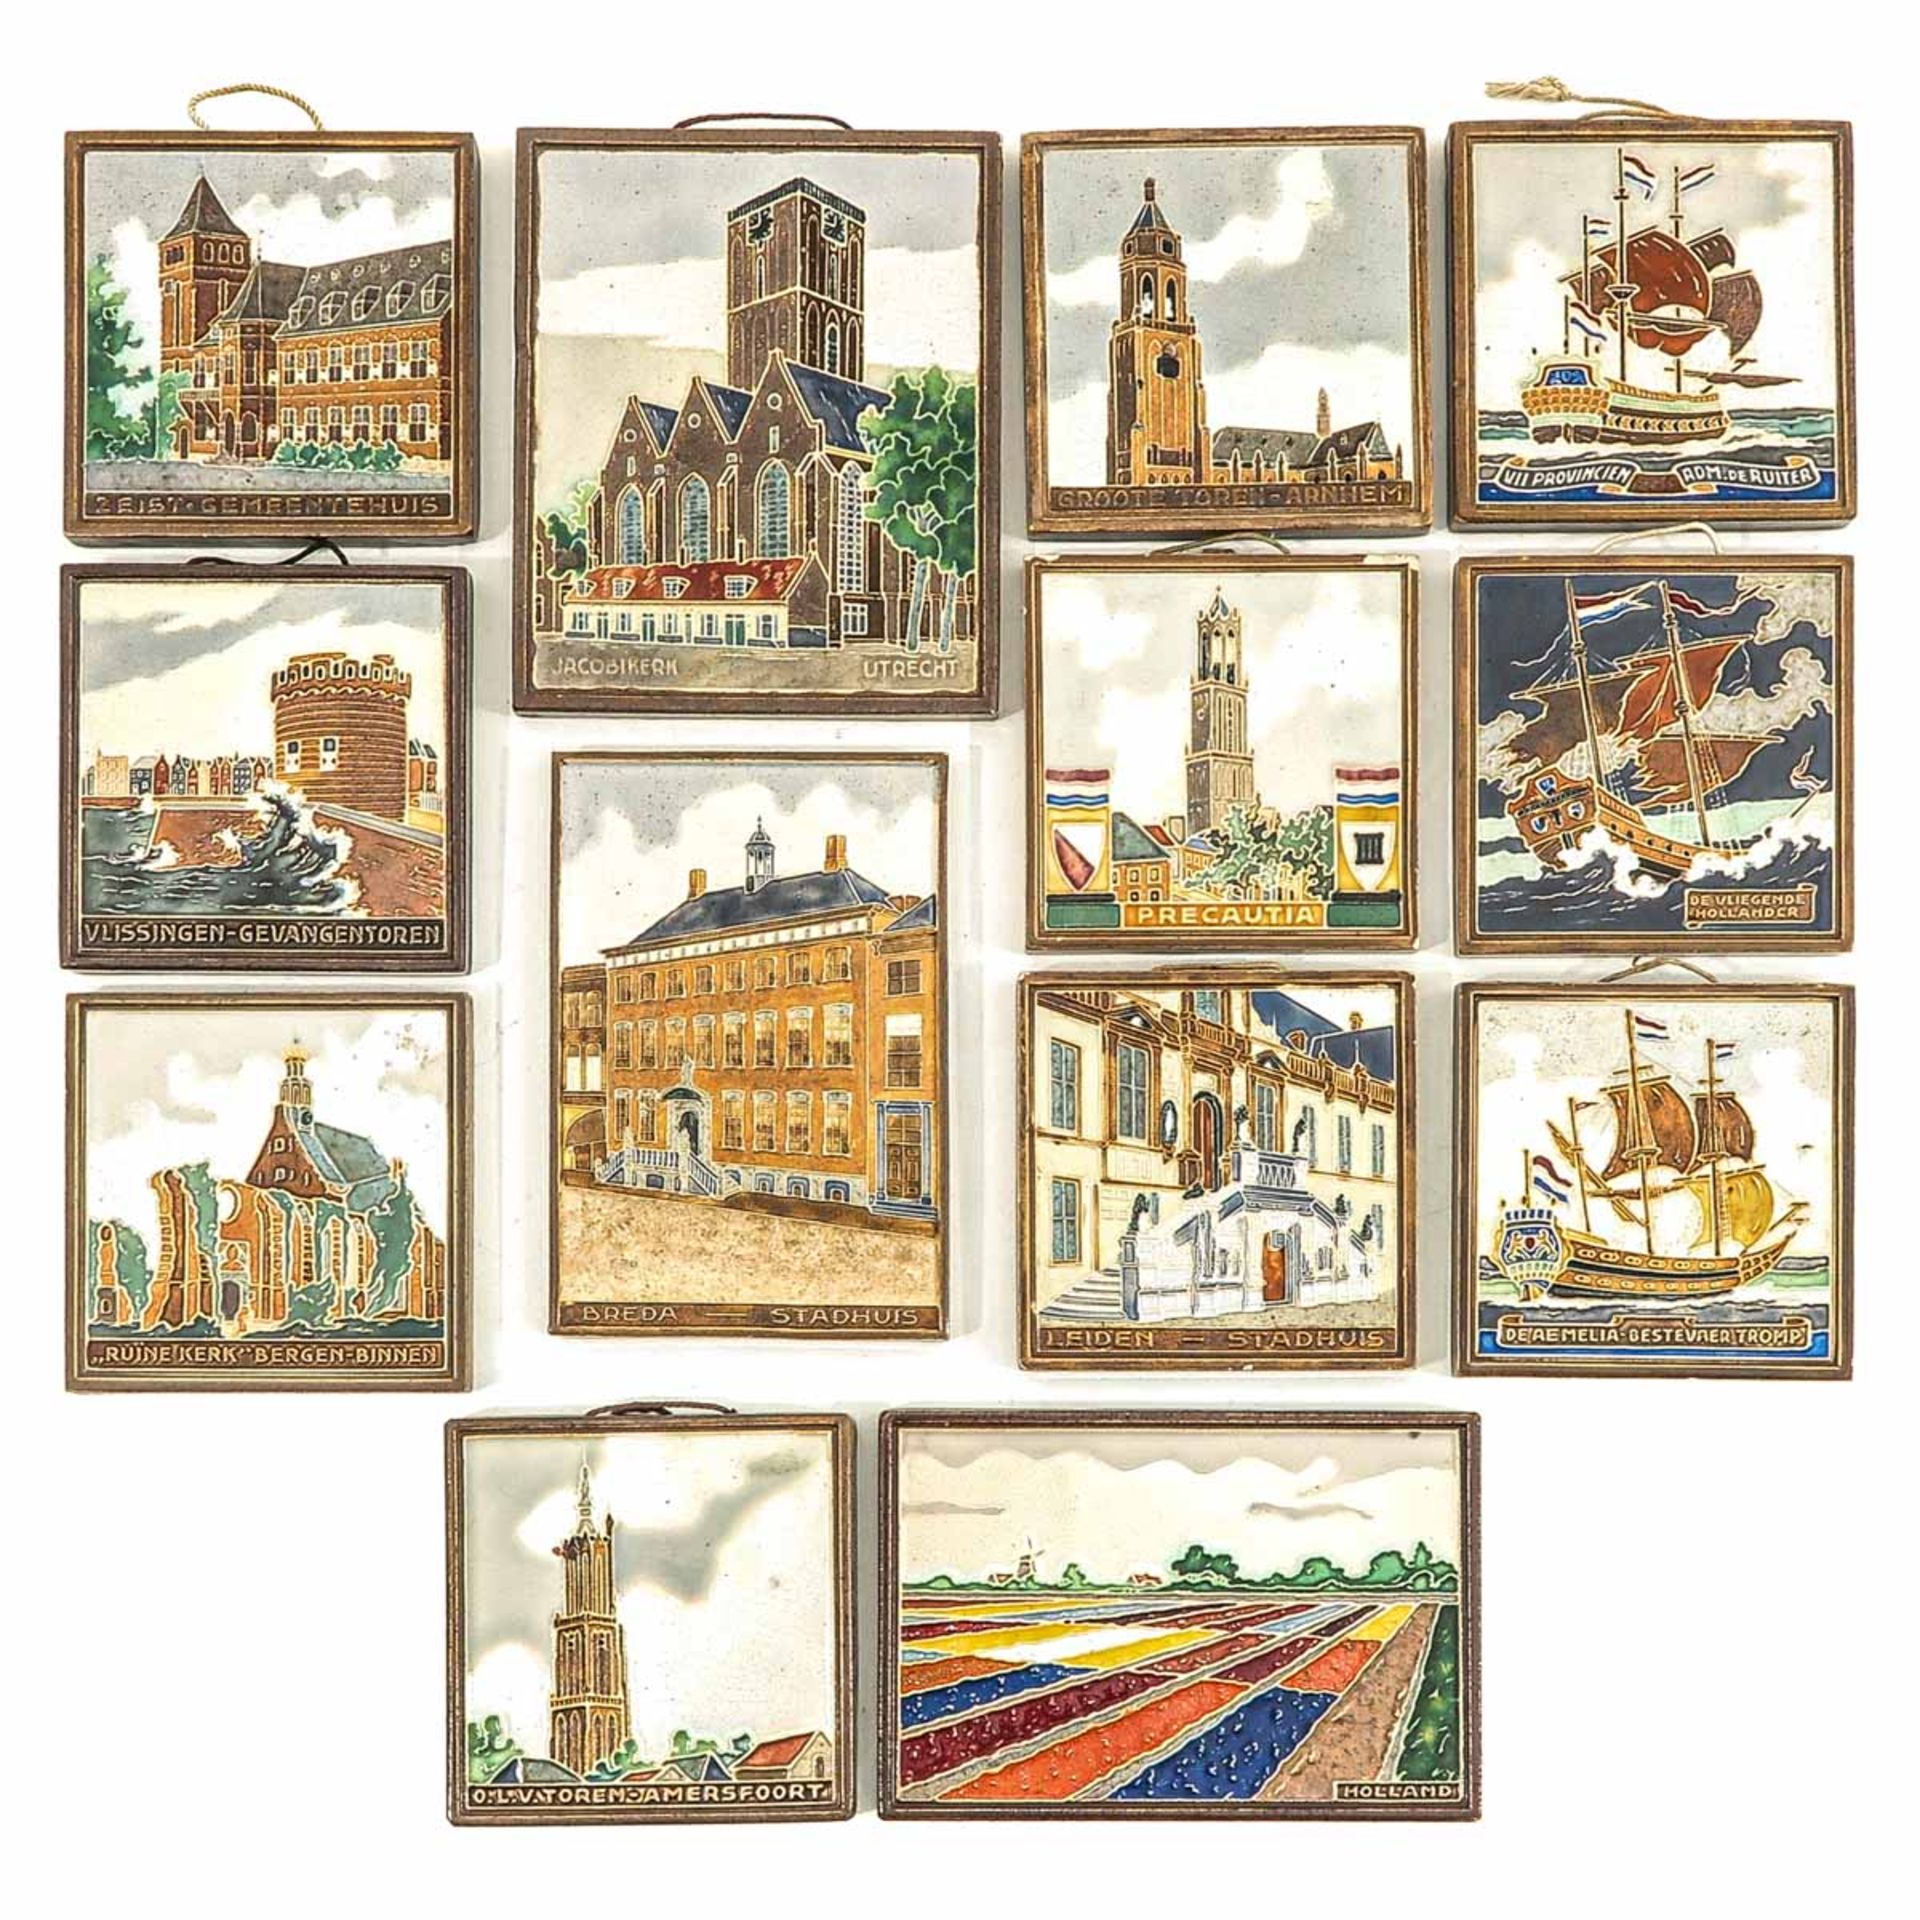 A Collection of 13 Westraven Utrecht Tiles